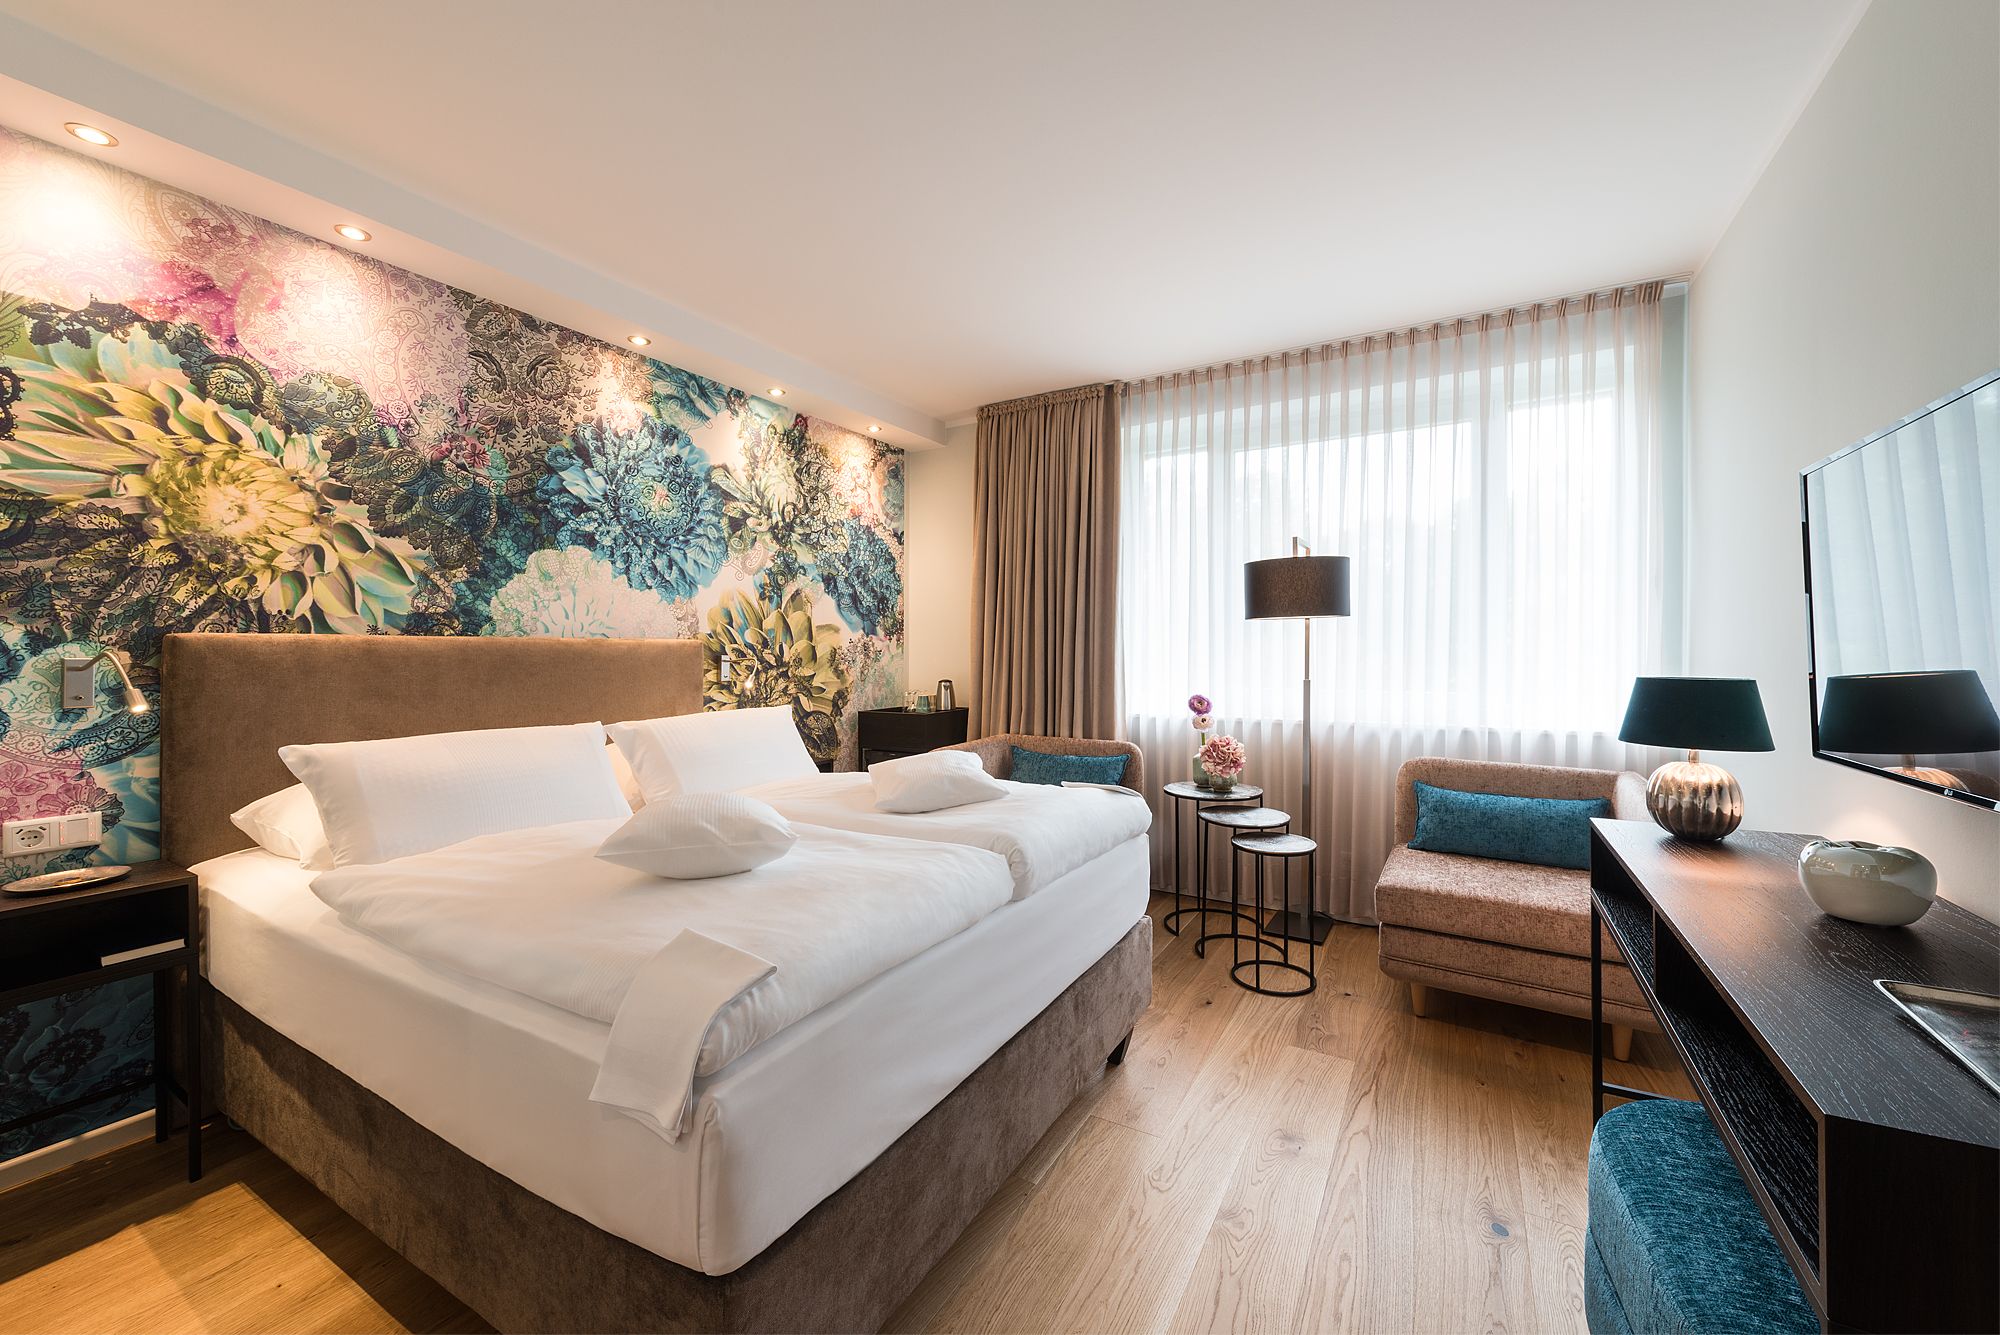 Room of the "Auszeit" category - Hotel Munte Bremen